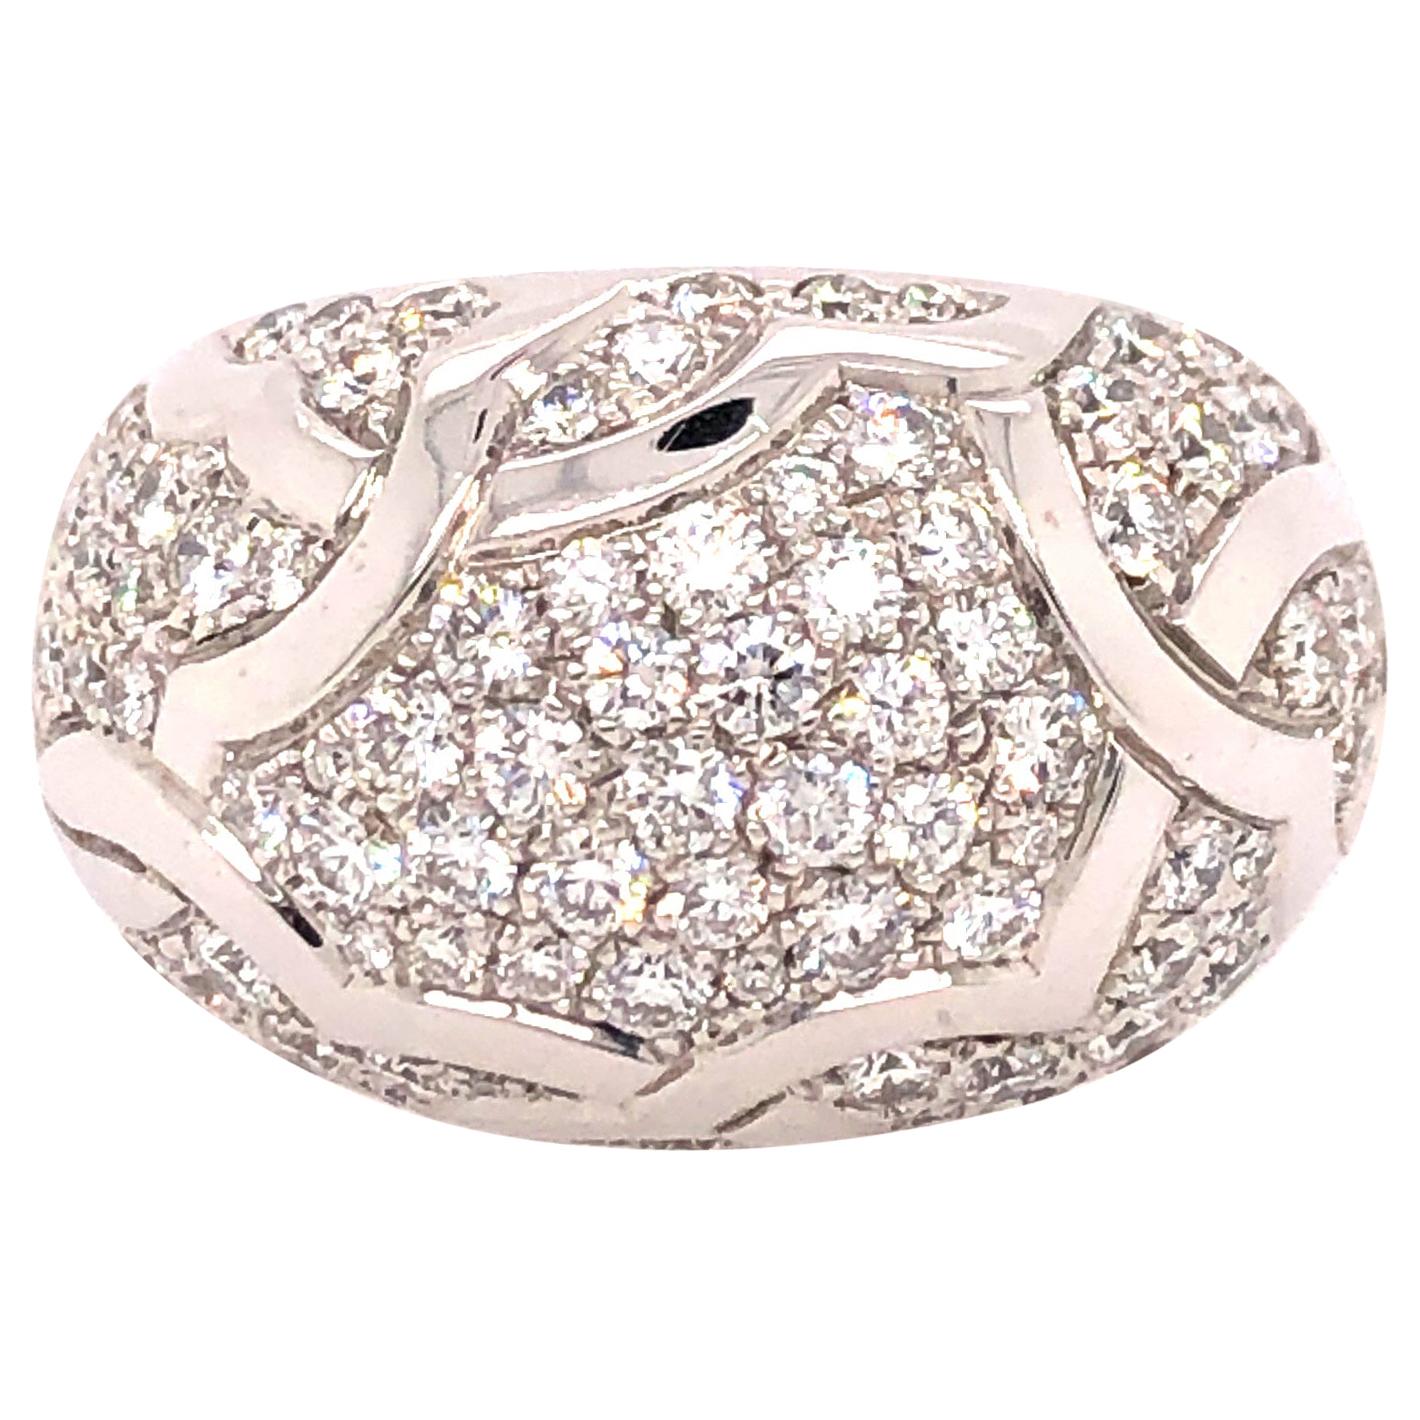 Chanel White Gold Diamond Dome Ring